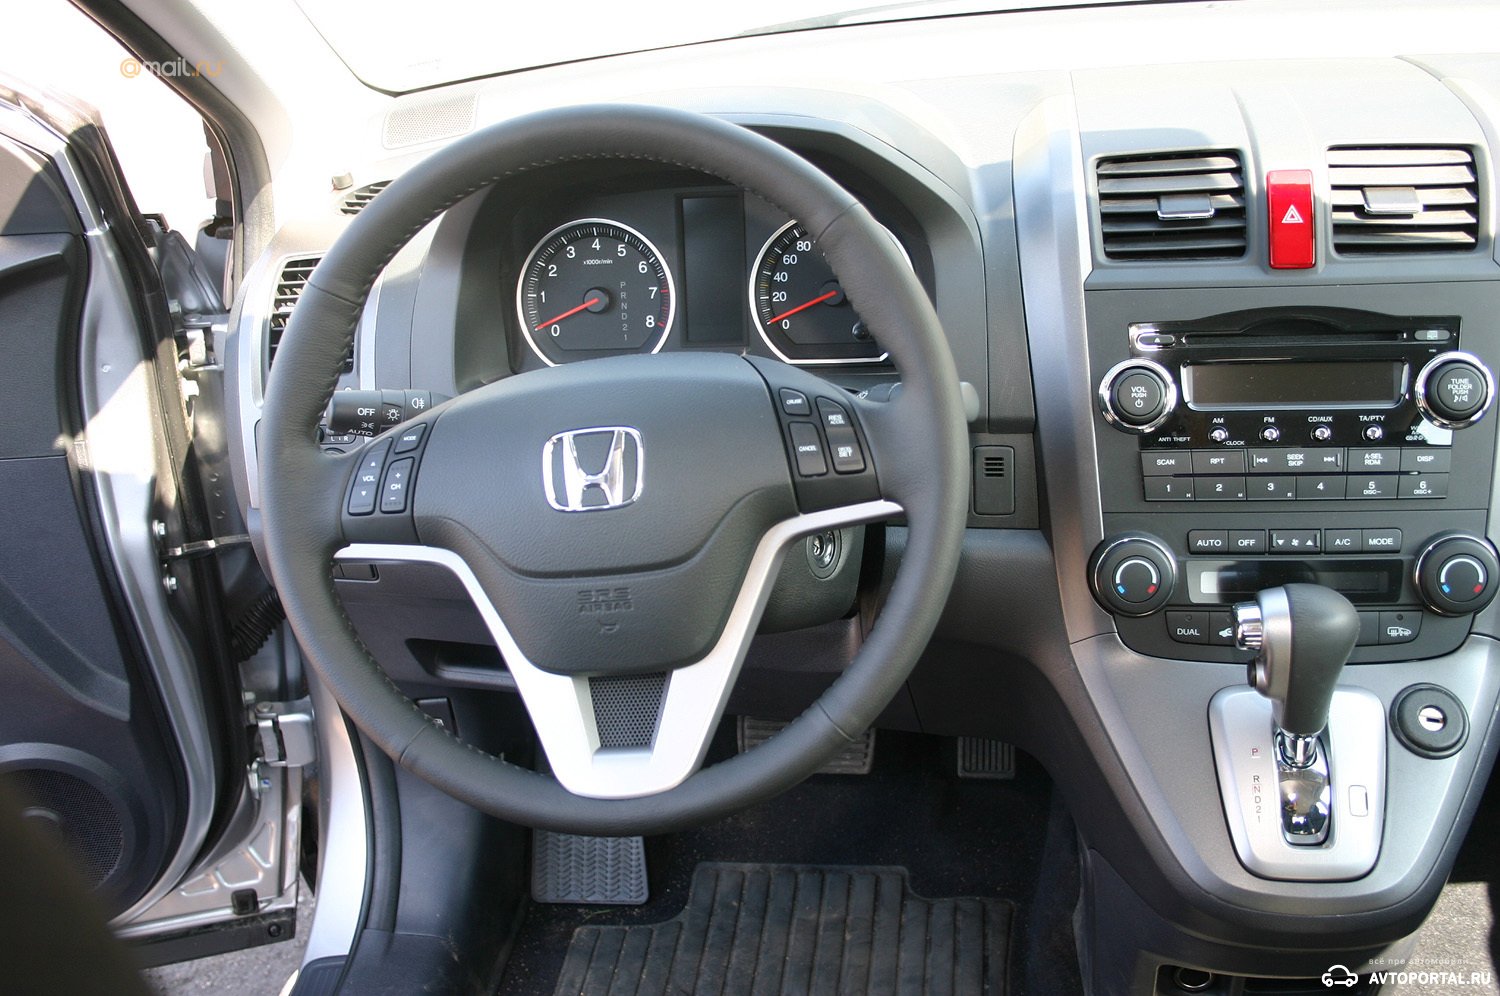 Honda cr панель. Honda CR-V 2007 салон. Honda CRV 3 салон. Хонда СРВ 3 поколения. Торпеда Хонда СРВ 3.